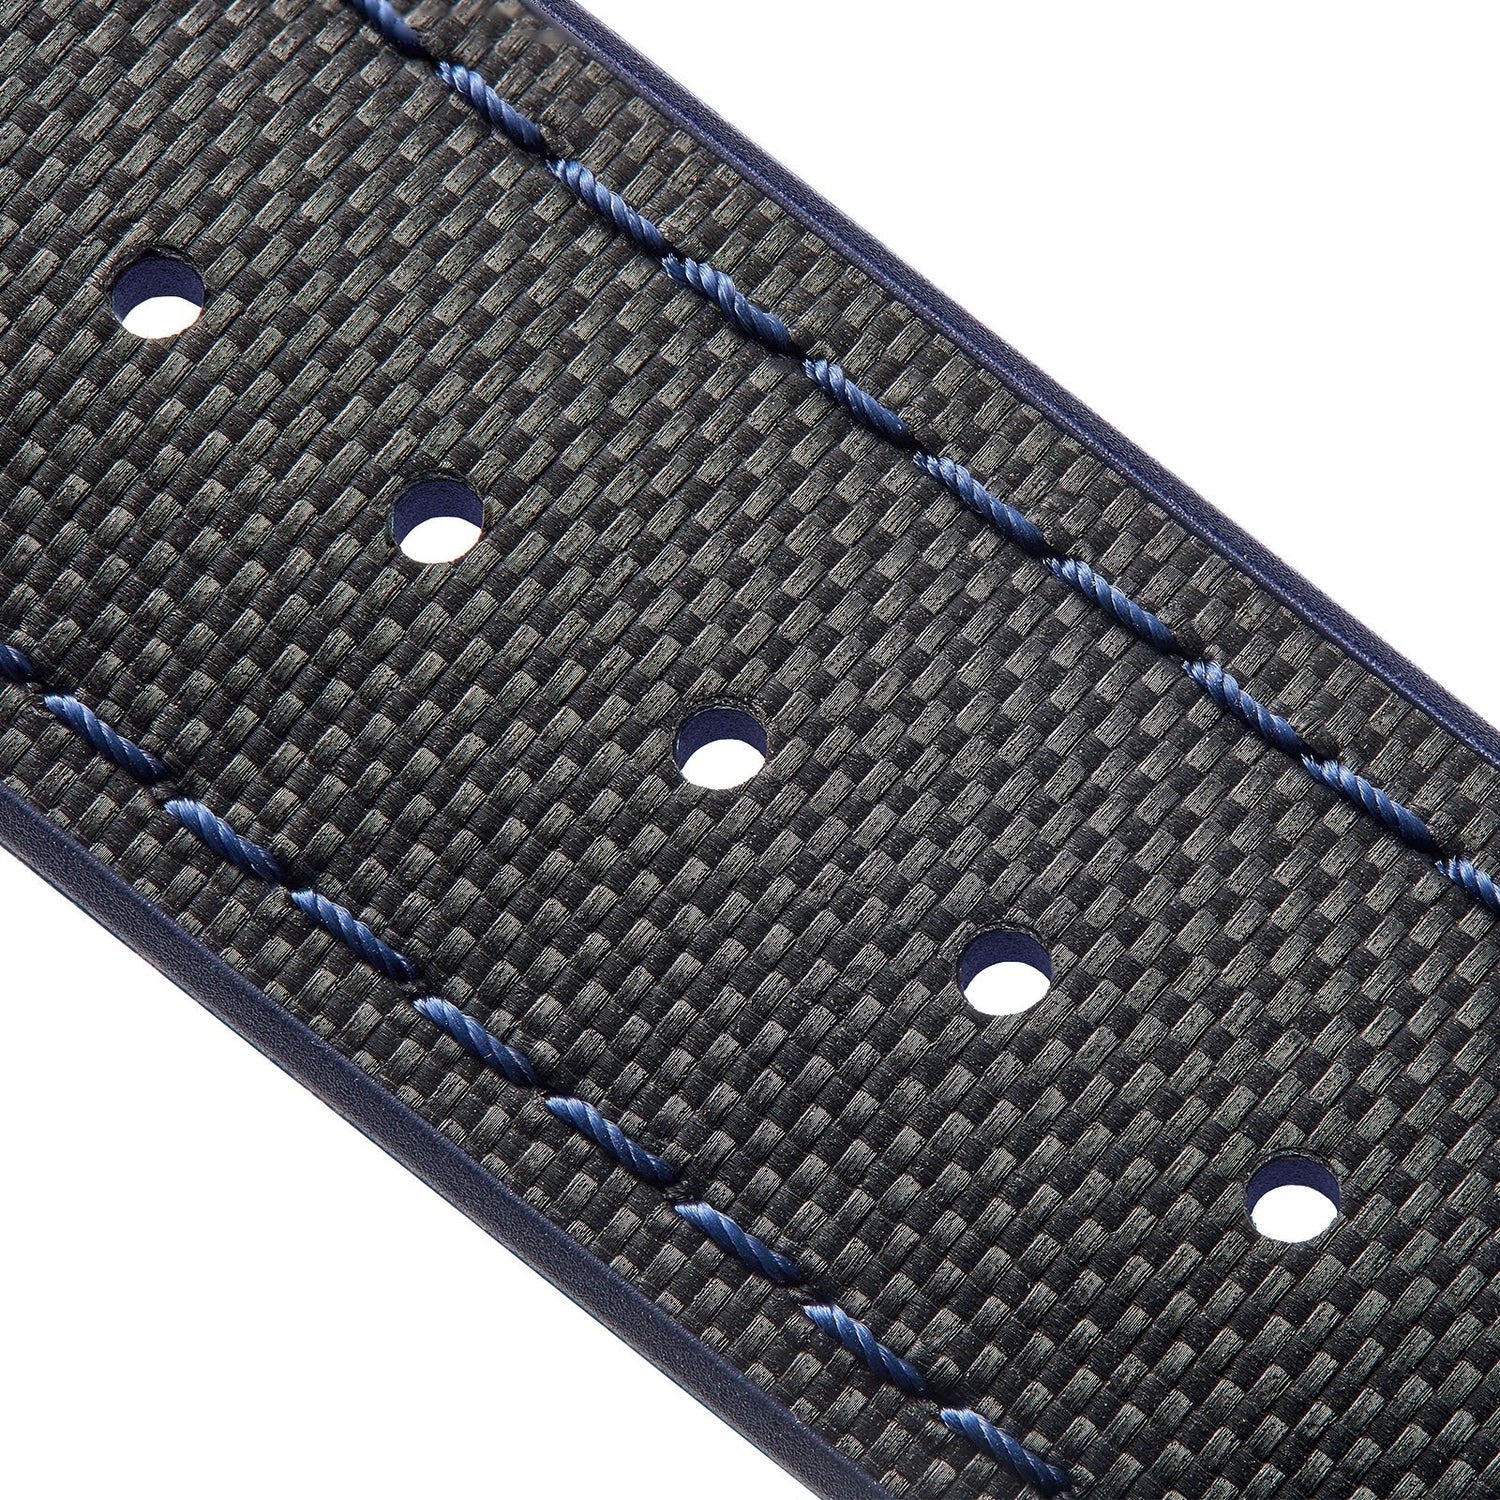 Martin Baker Chalgrove leather rubber black strap blue stitching embossed bremont logo